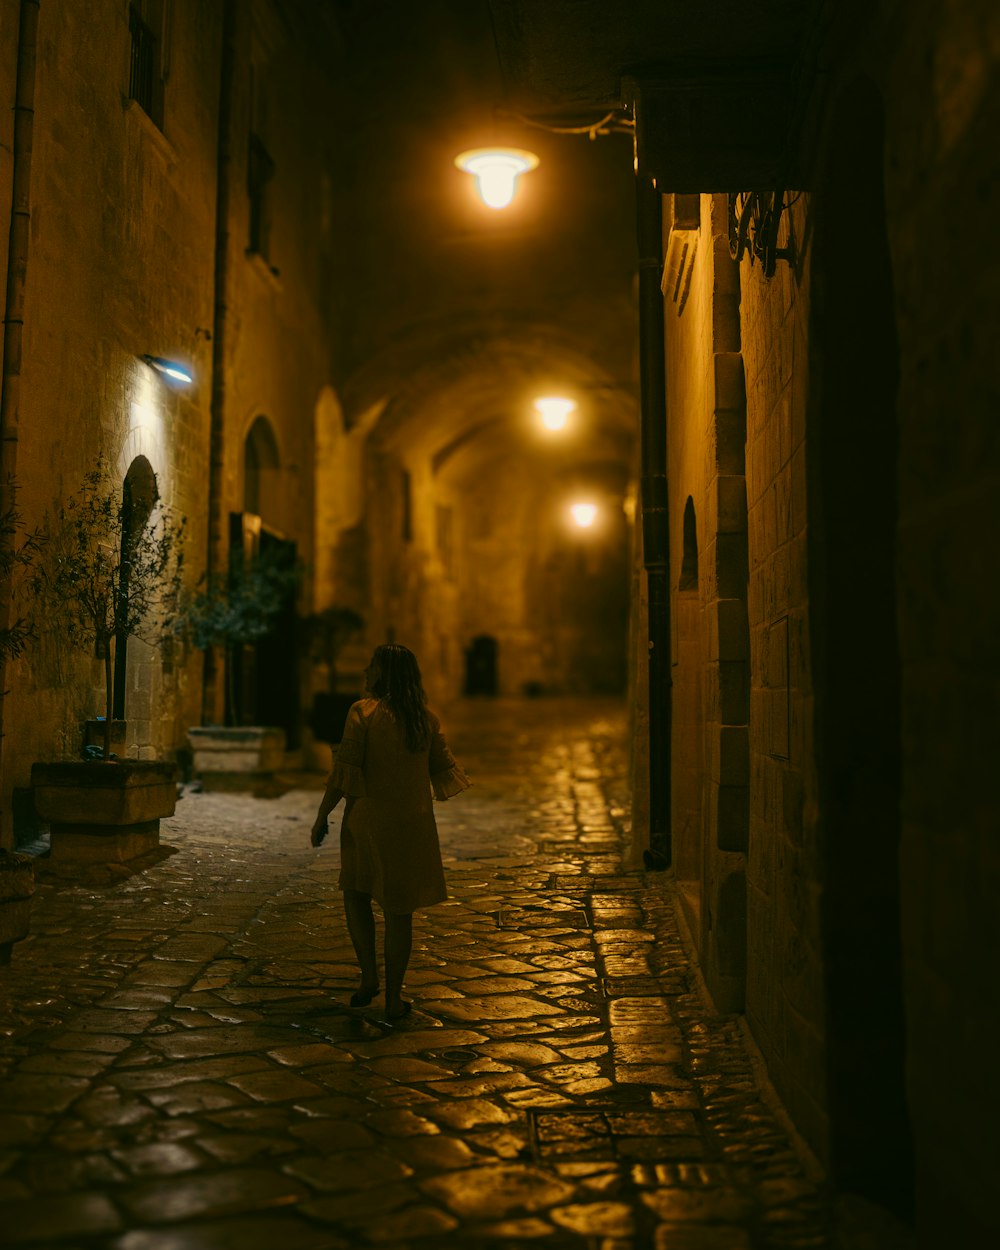 a woman walking down a dark alley way